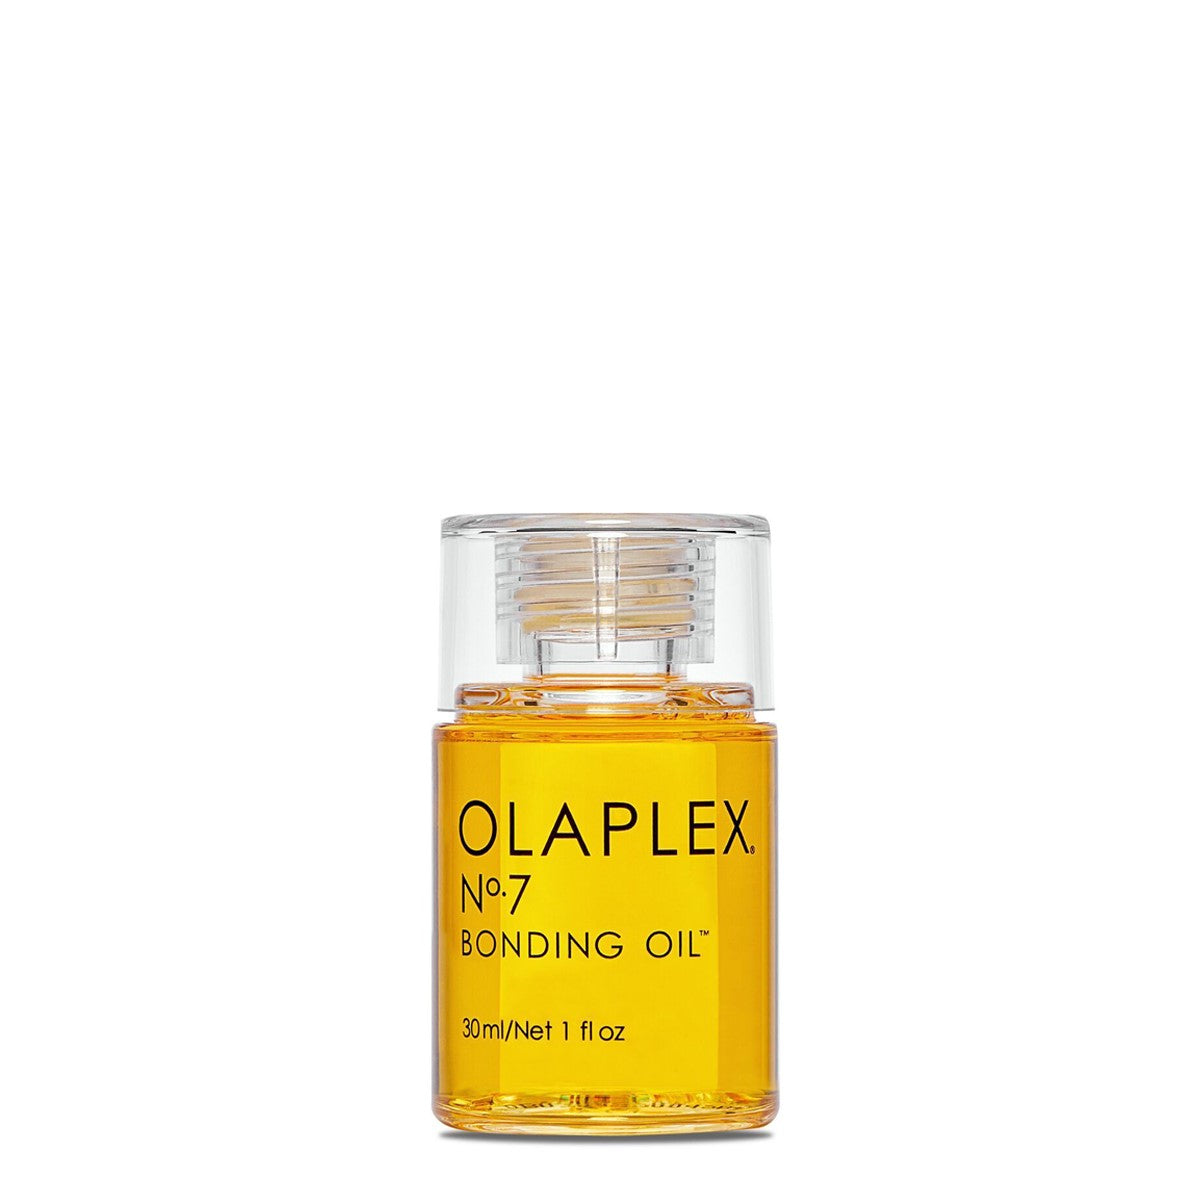 Olaplex Bonding Oil, No. 7 - 30 ml